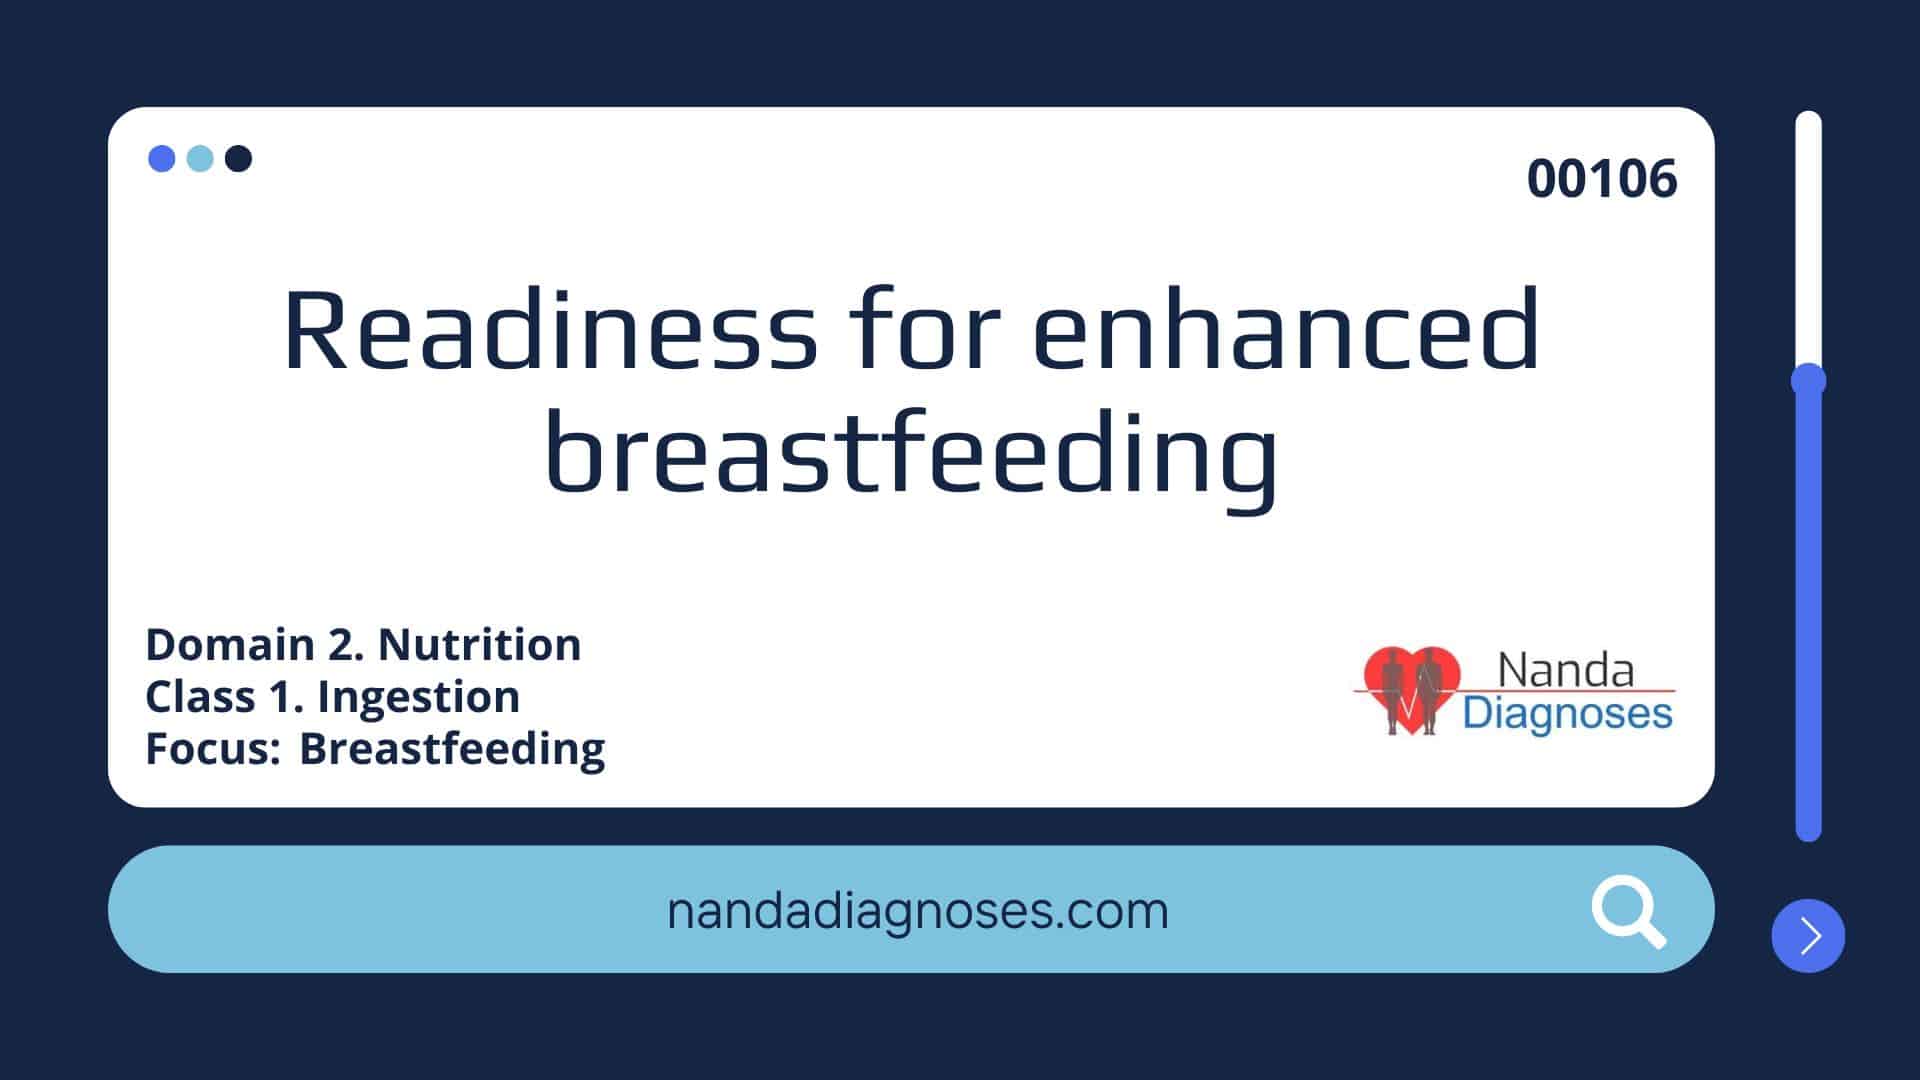 Readiness for enhanced breastfeeding